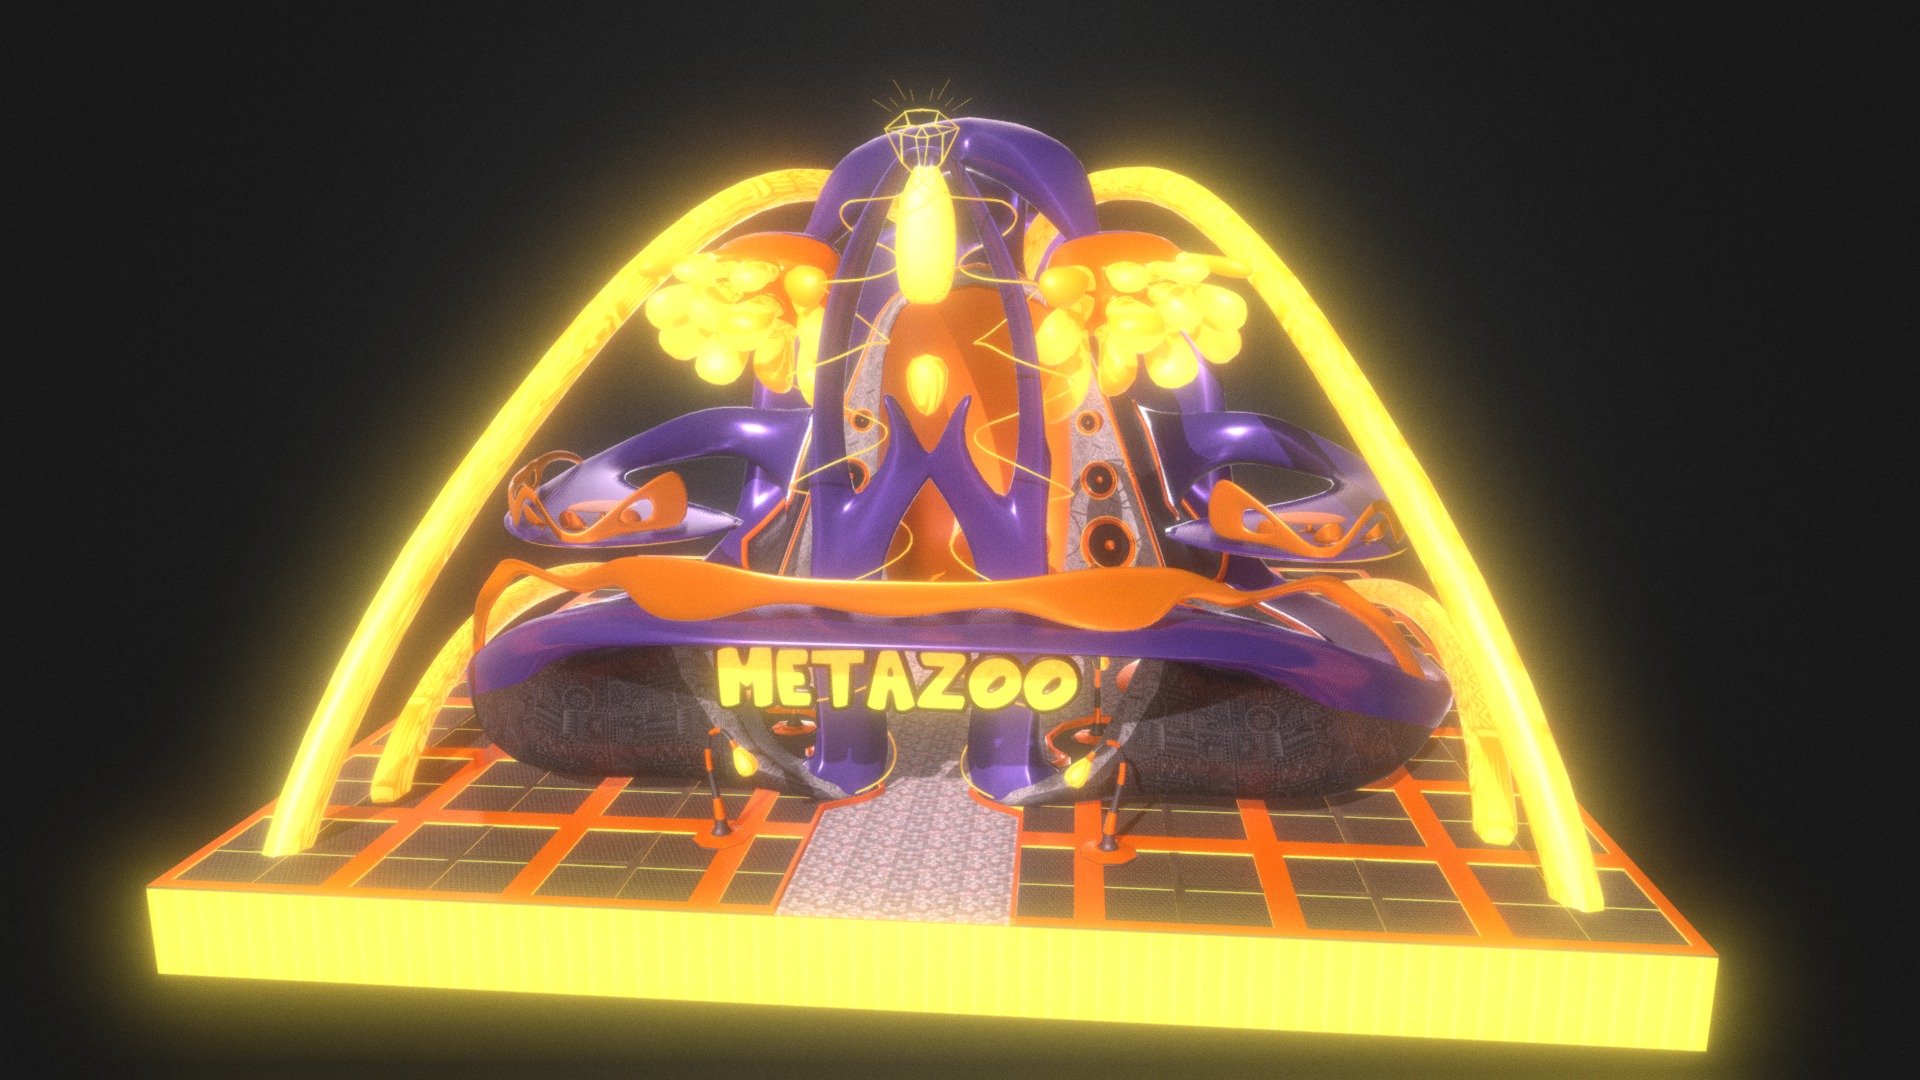 MetaZoo Ateria build - MetaZoo 4x4 Display - 3D model by SangoOfTheEast 3d model